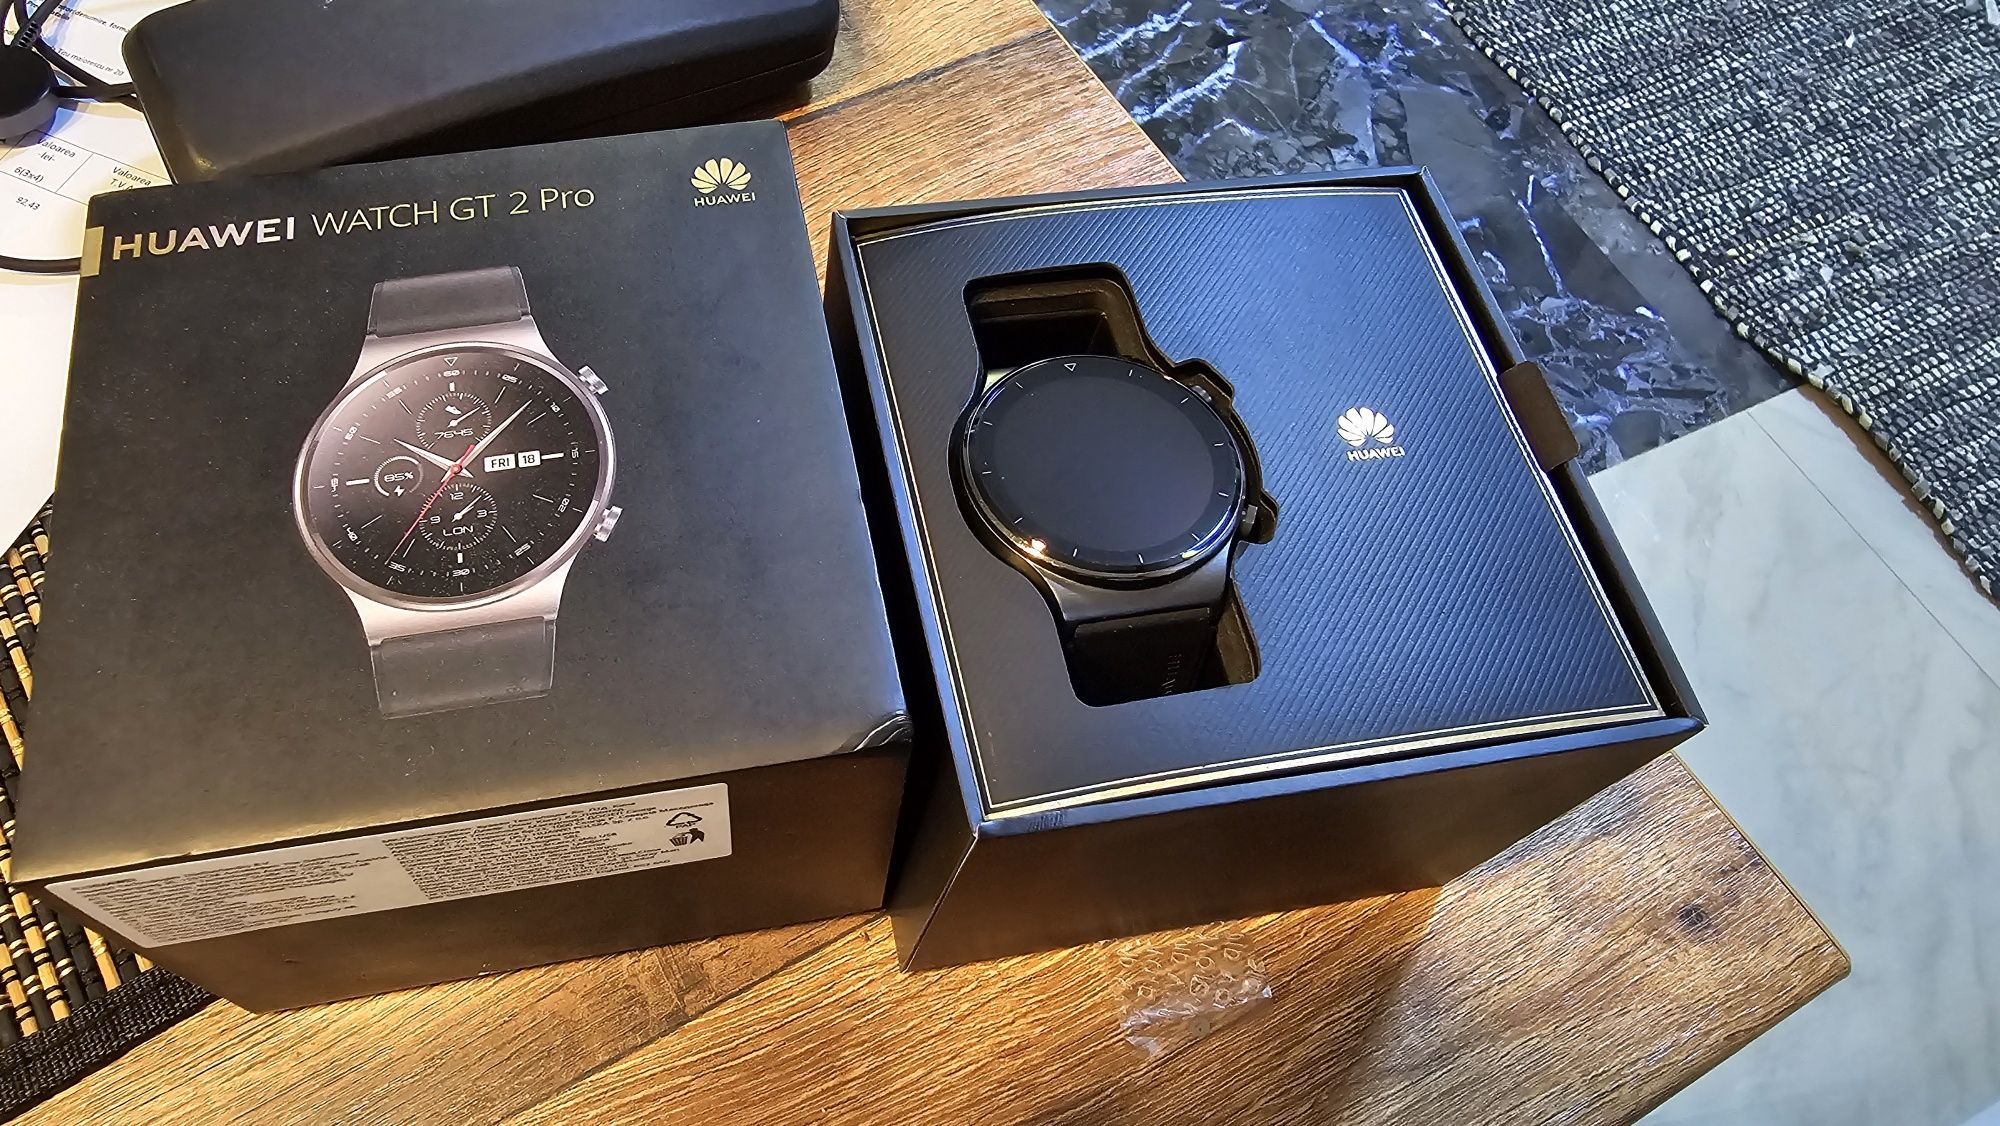 Huawei watch gt2 pro